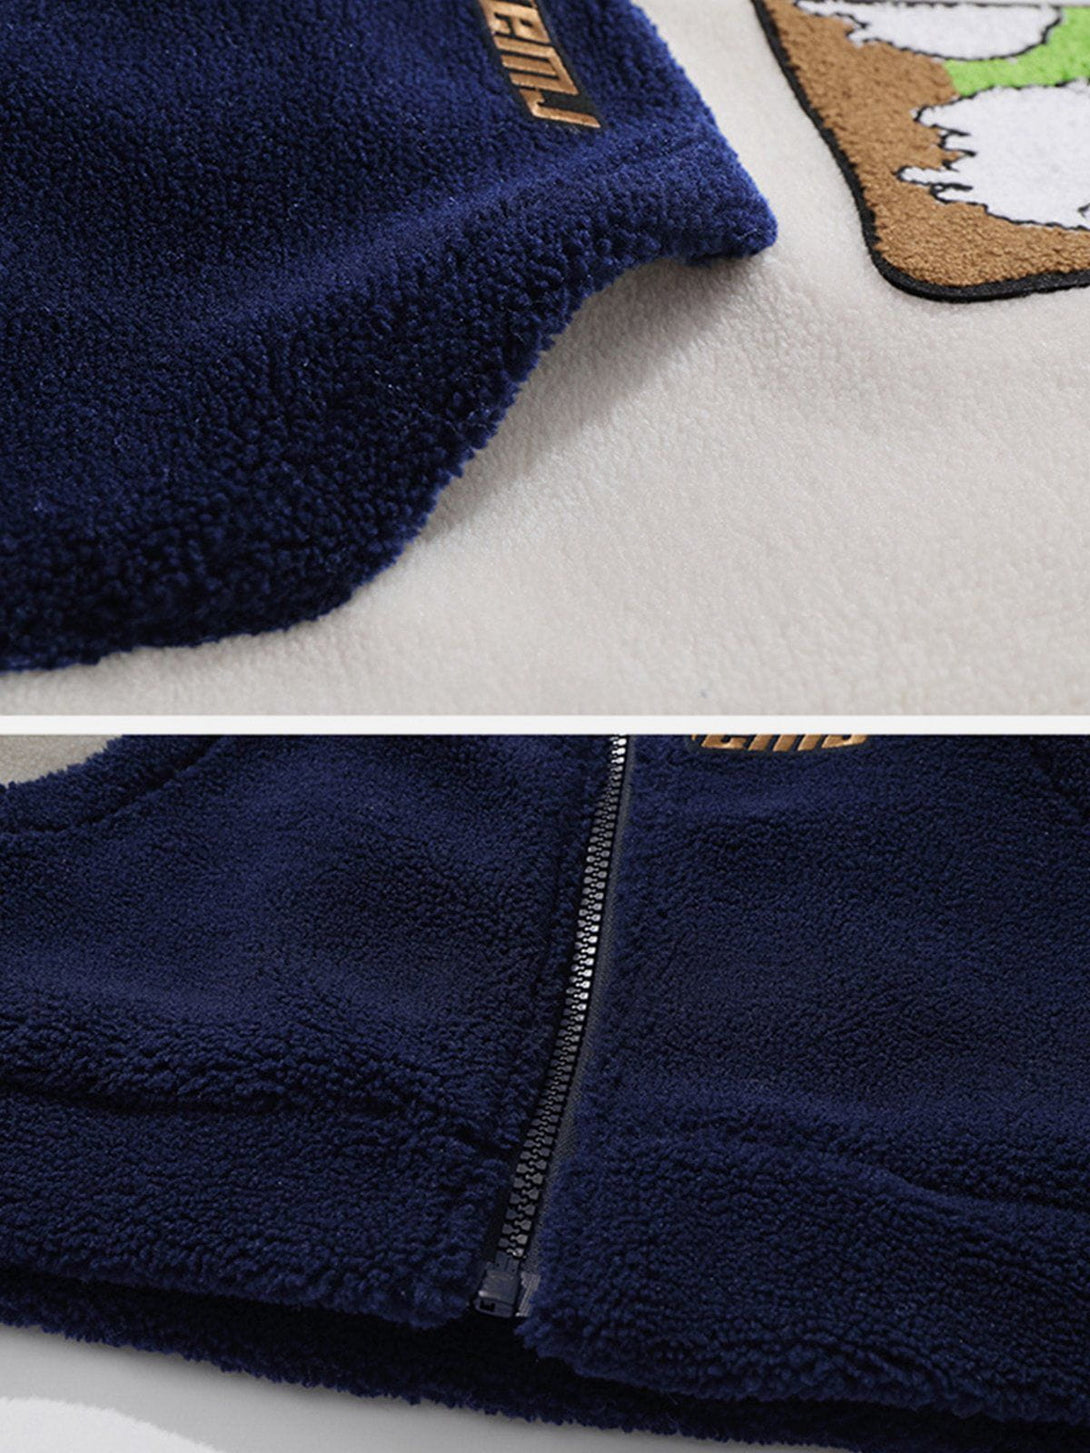 Majesda® - Flocked Cute Sheep Sherpa Winter Coat outfit ideas streetwear fashion